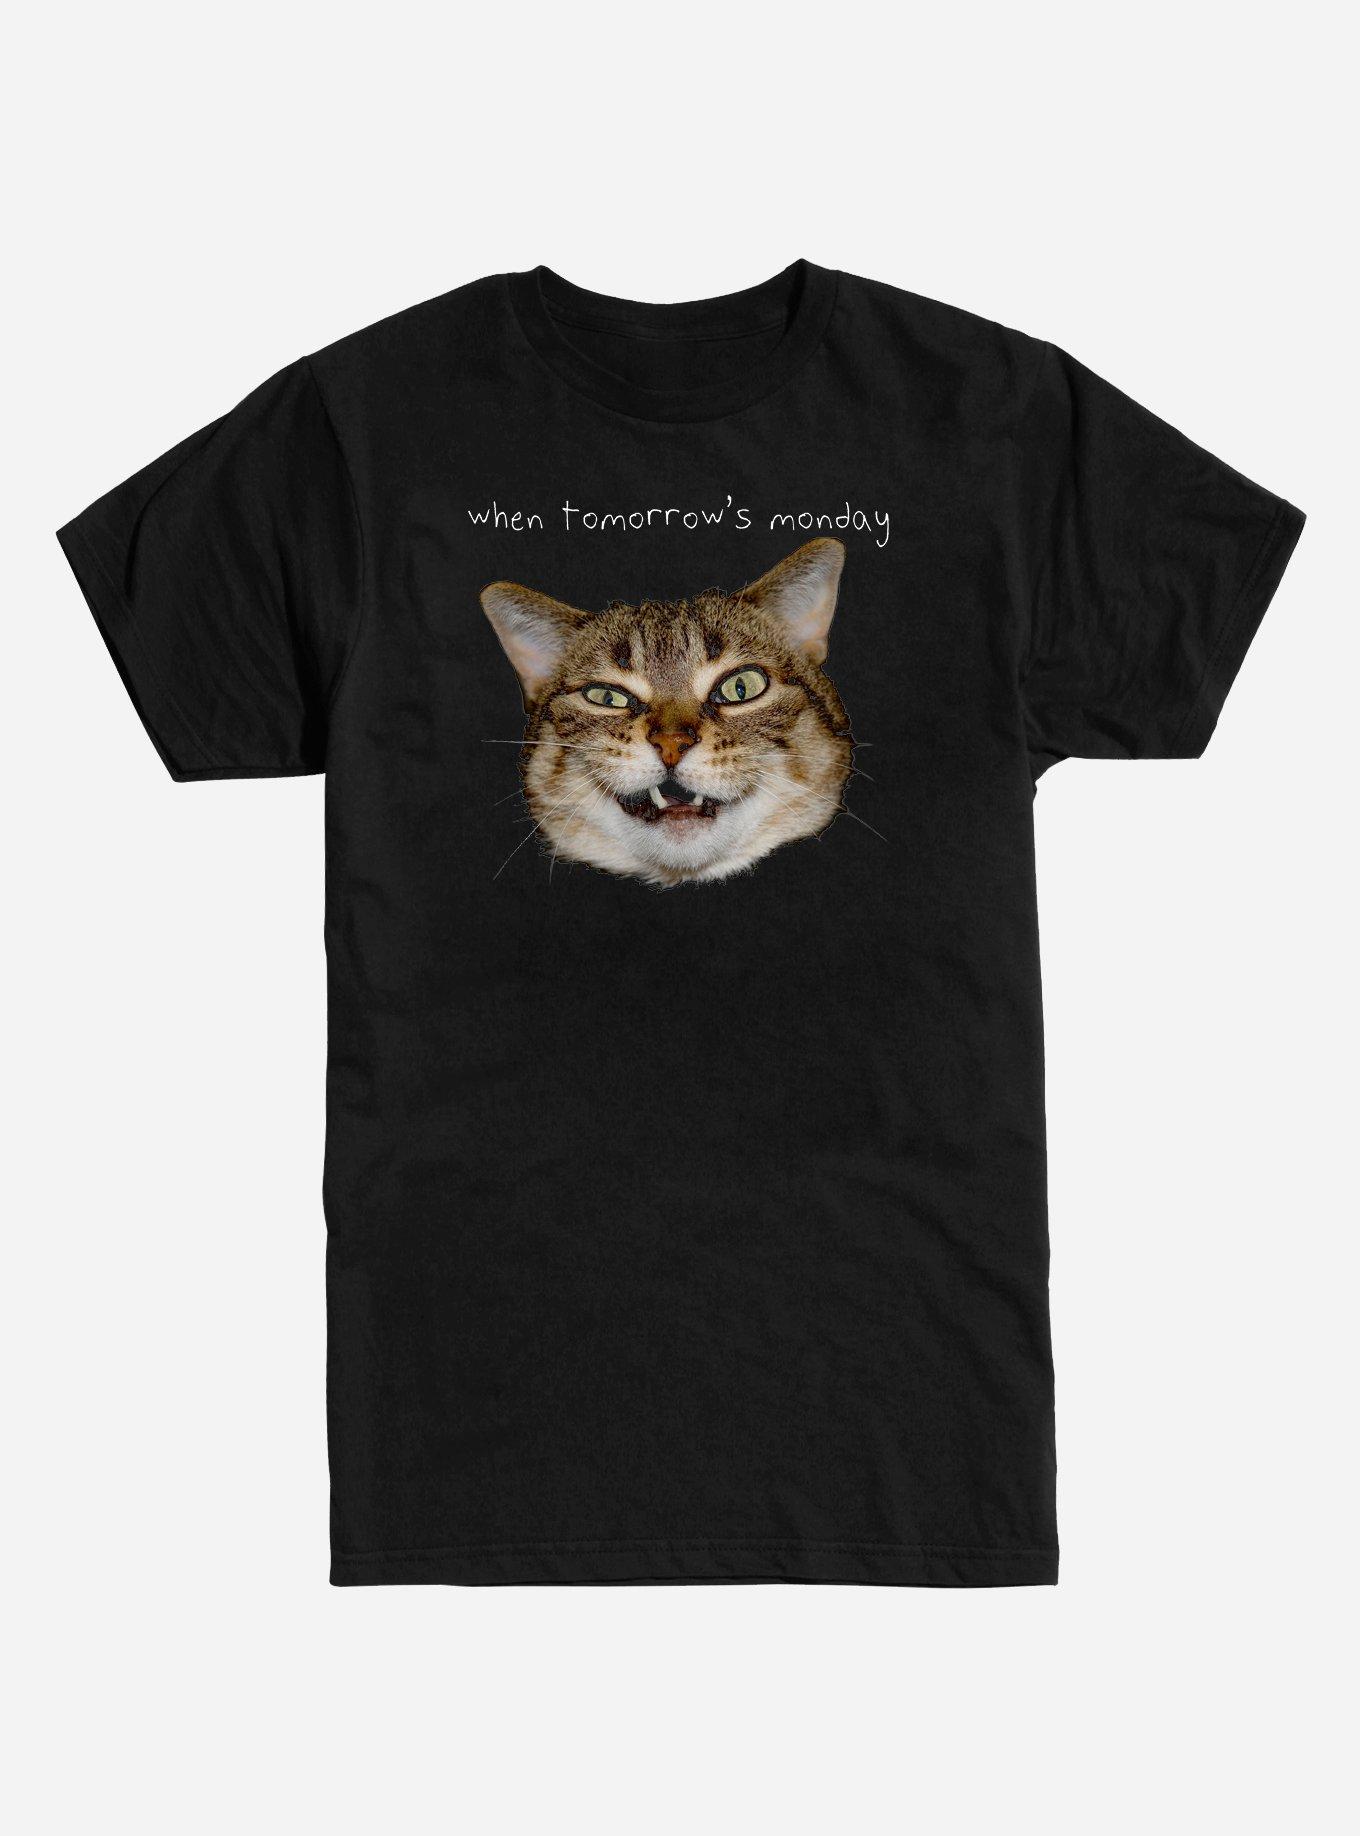 Tomorrow's Monday Cat T-Shirt - BLACK | Hot Topic